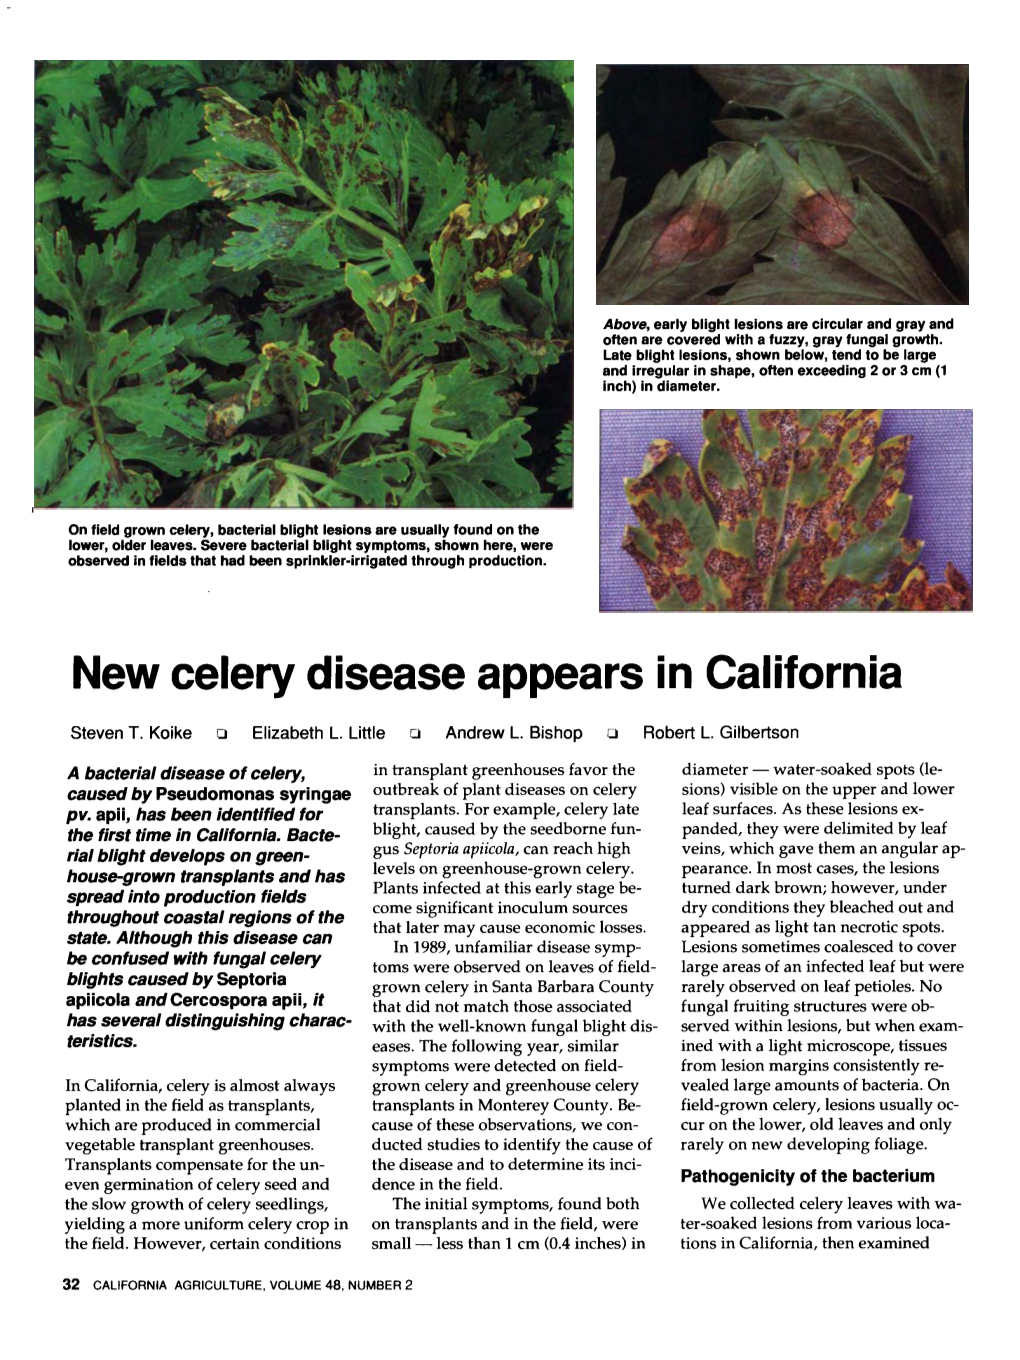 New Celery Disease Appears in California